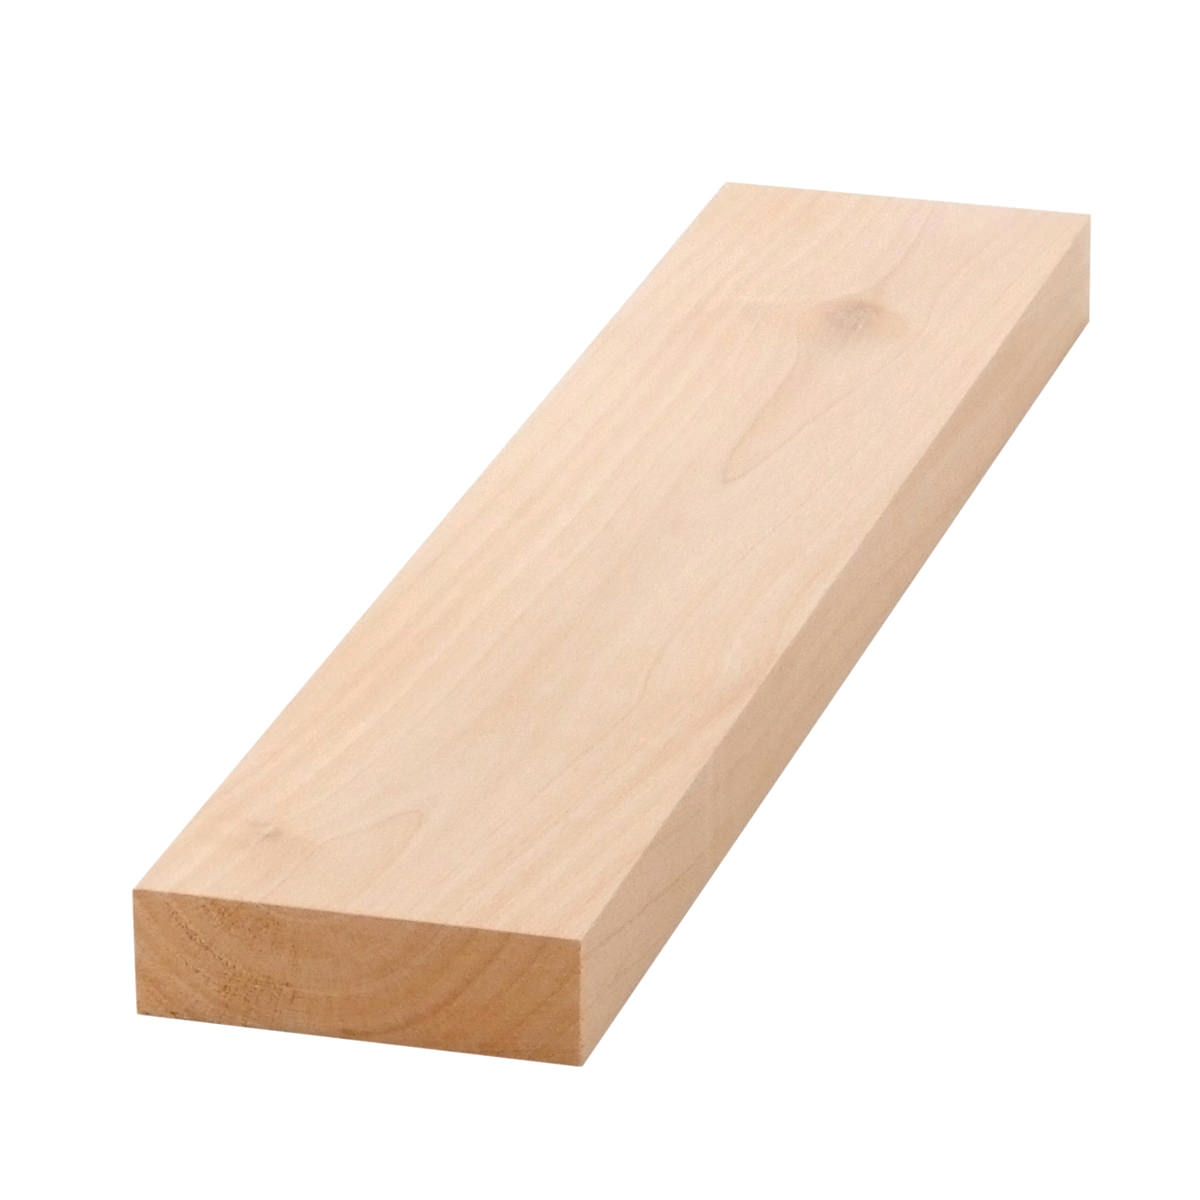 1x3 (3/4" x 21/2") Natural Alder S4S Lumber, Boards